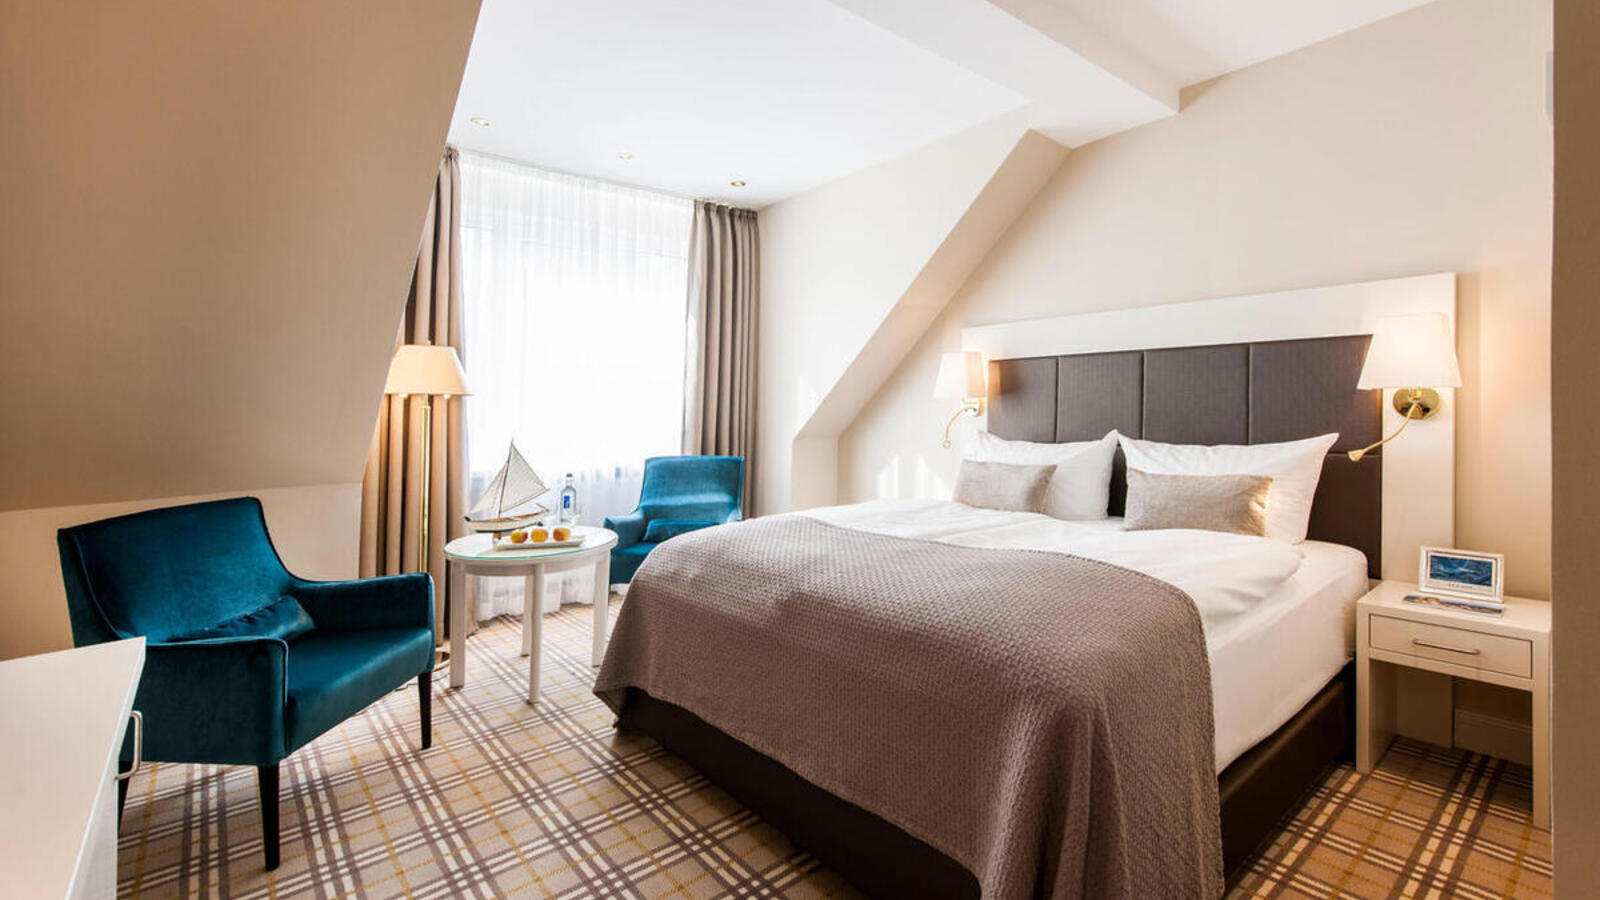 Comfortable, wide double bed ensures restful sleep in the 4-star hotel Ringhotel Birke in Kiel